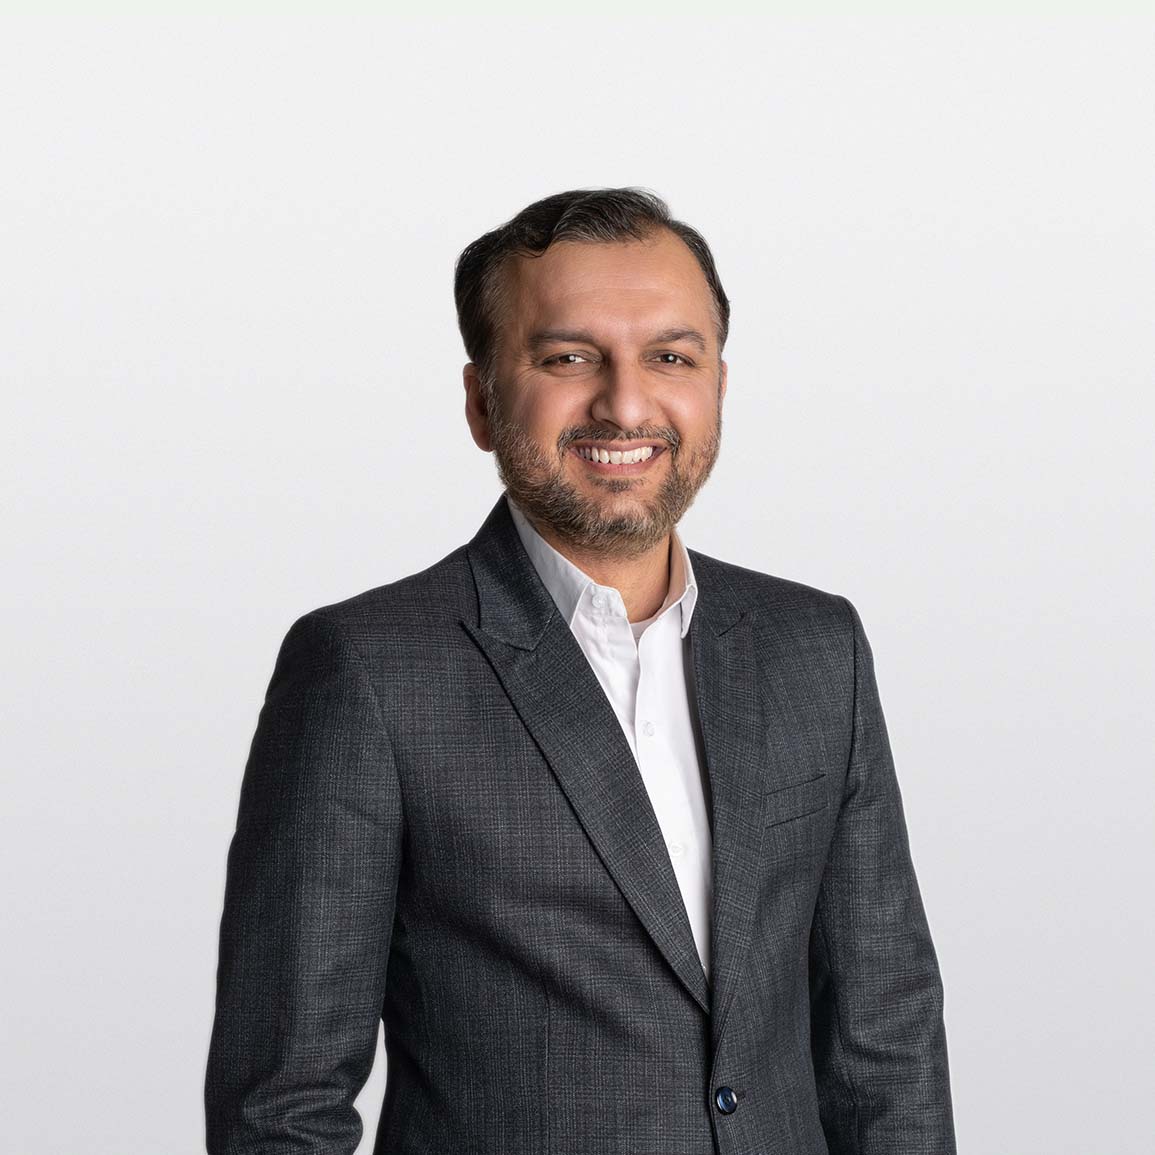 Image of Asif Dhanakwala, ATB Financial Advisor, on white background.